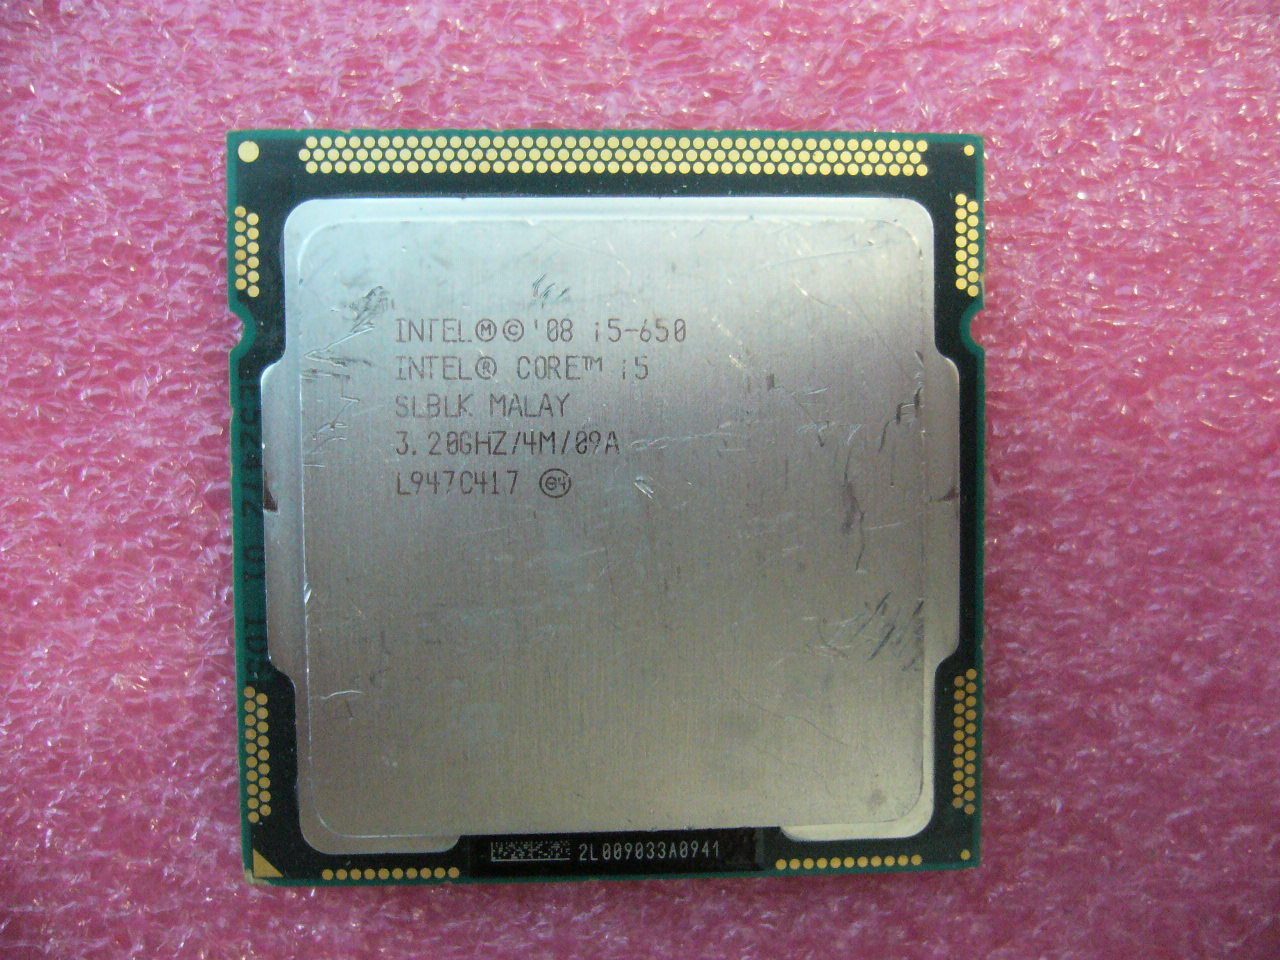 QTY 1x INTEL Core i5 Dual Core CPU i5-650 3.20GHZ/4MB LGA1156 SLBTJ SLBLK